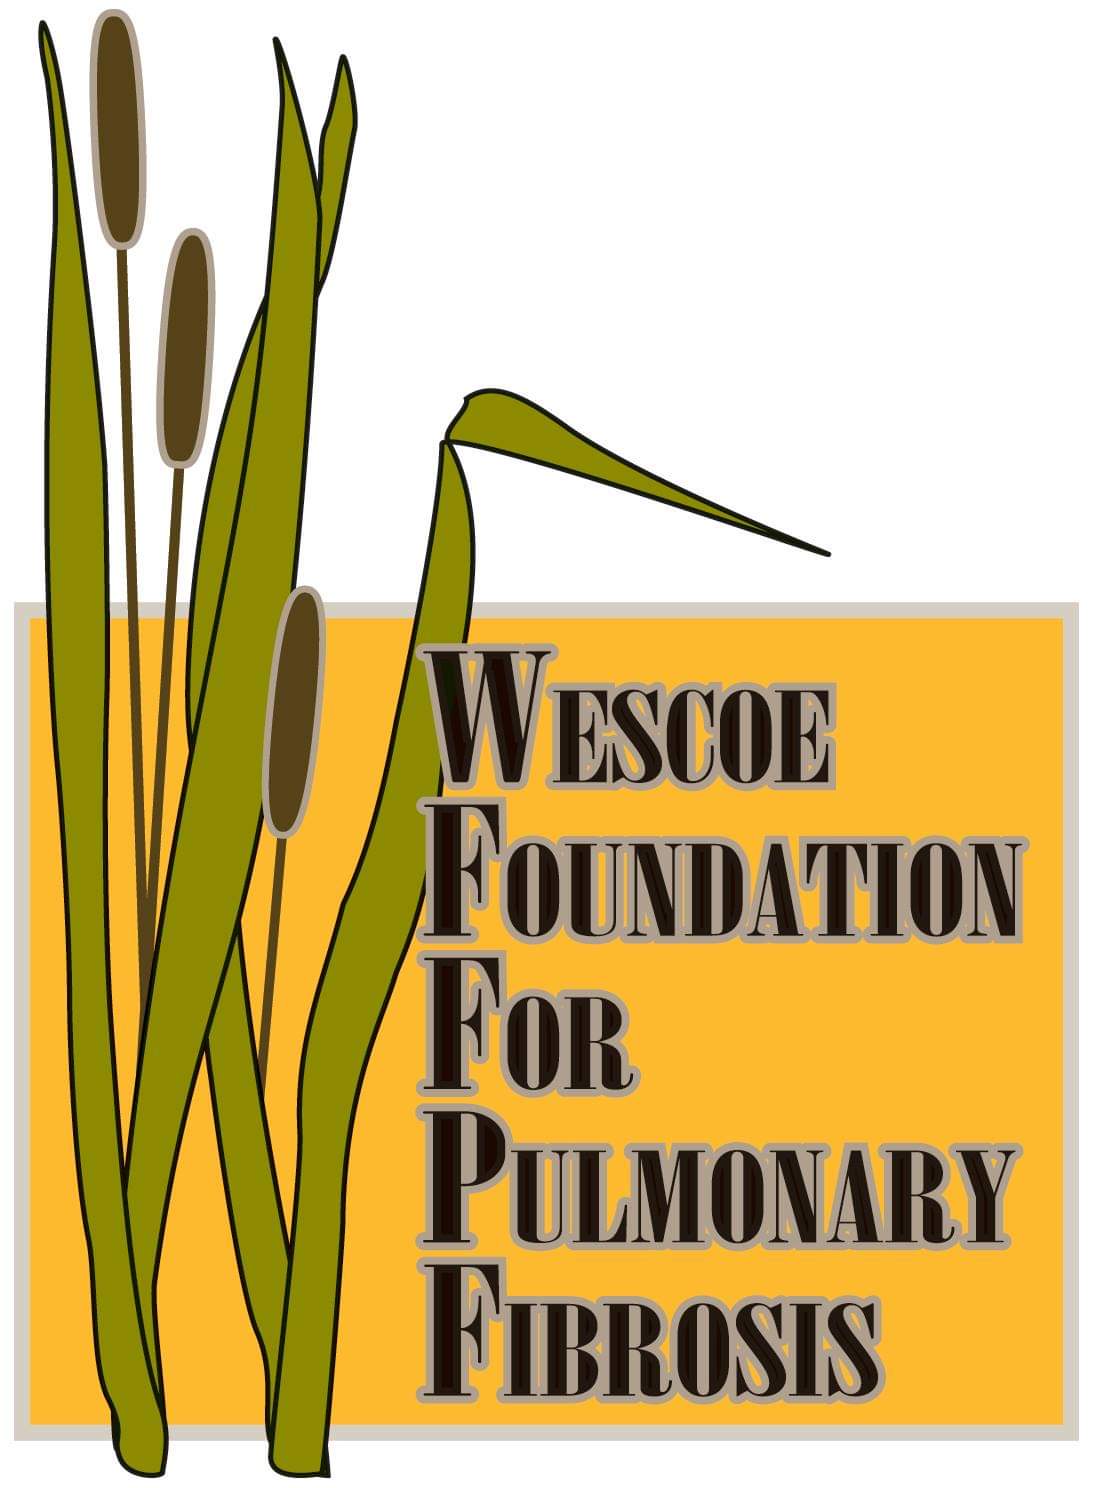 Wescoe Foundation for Pulmonary Fibrosis